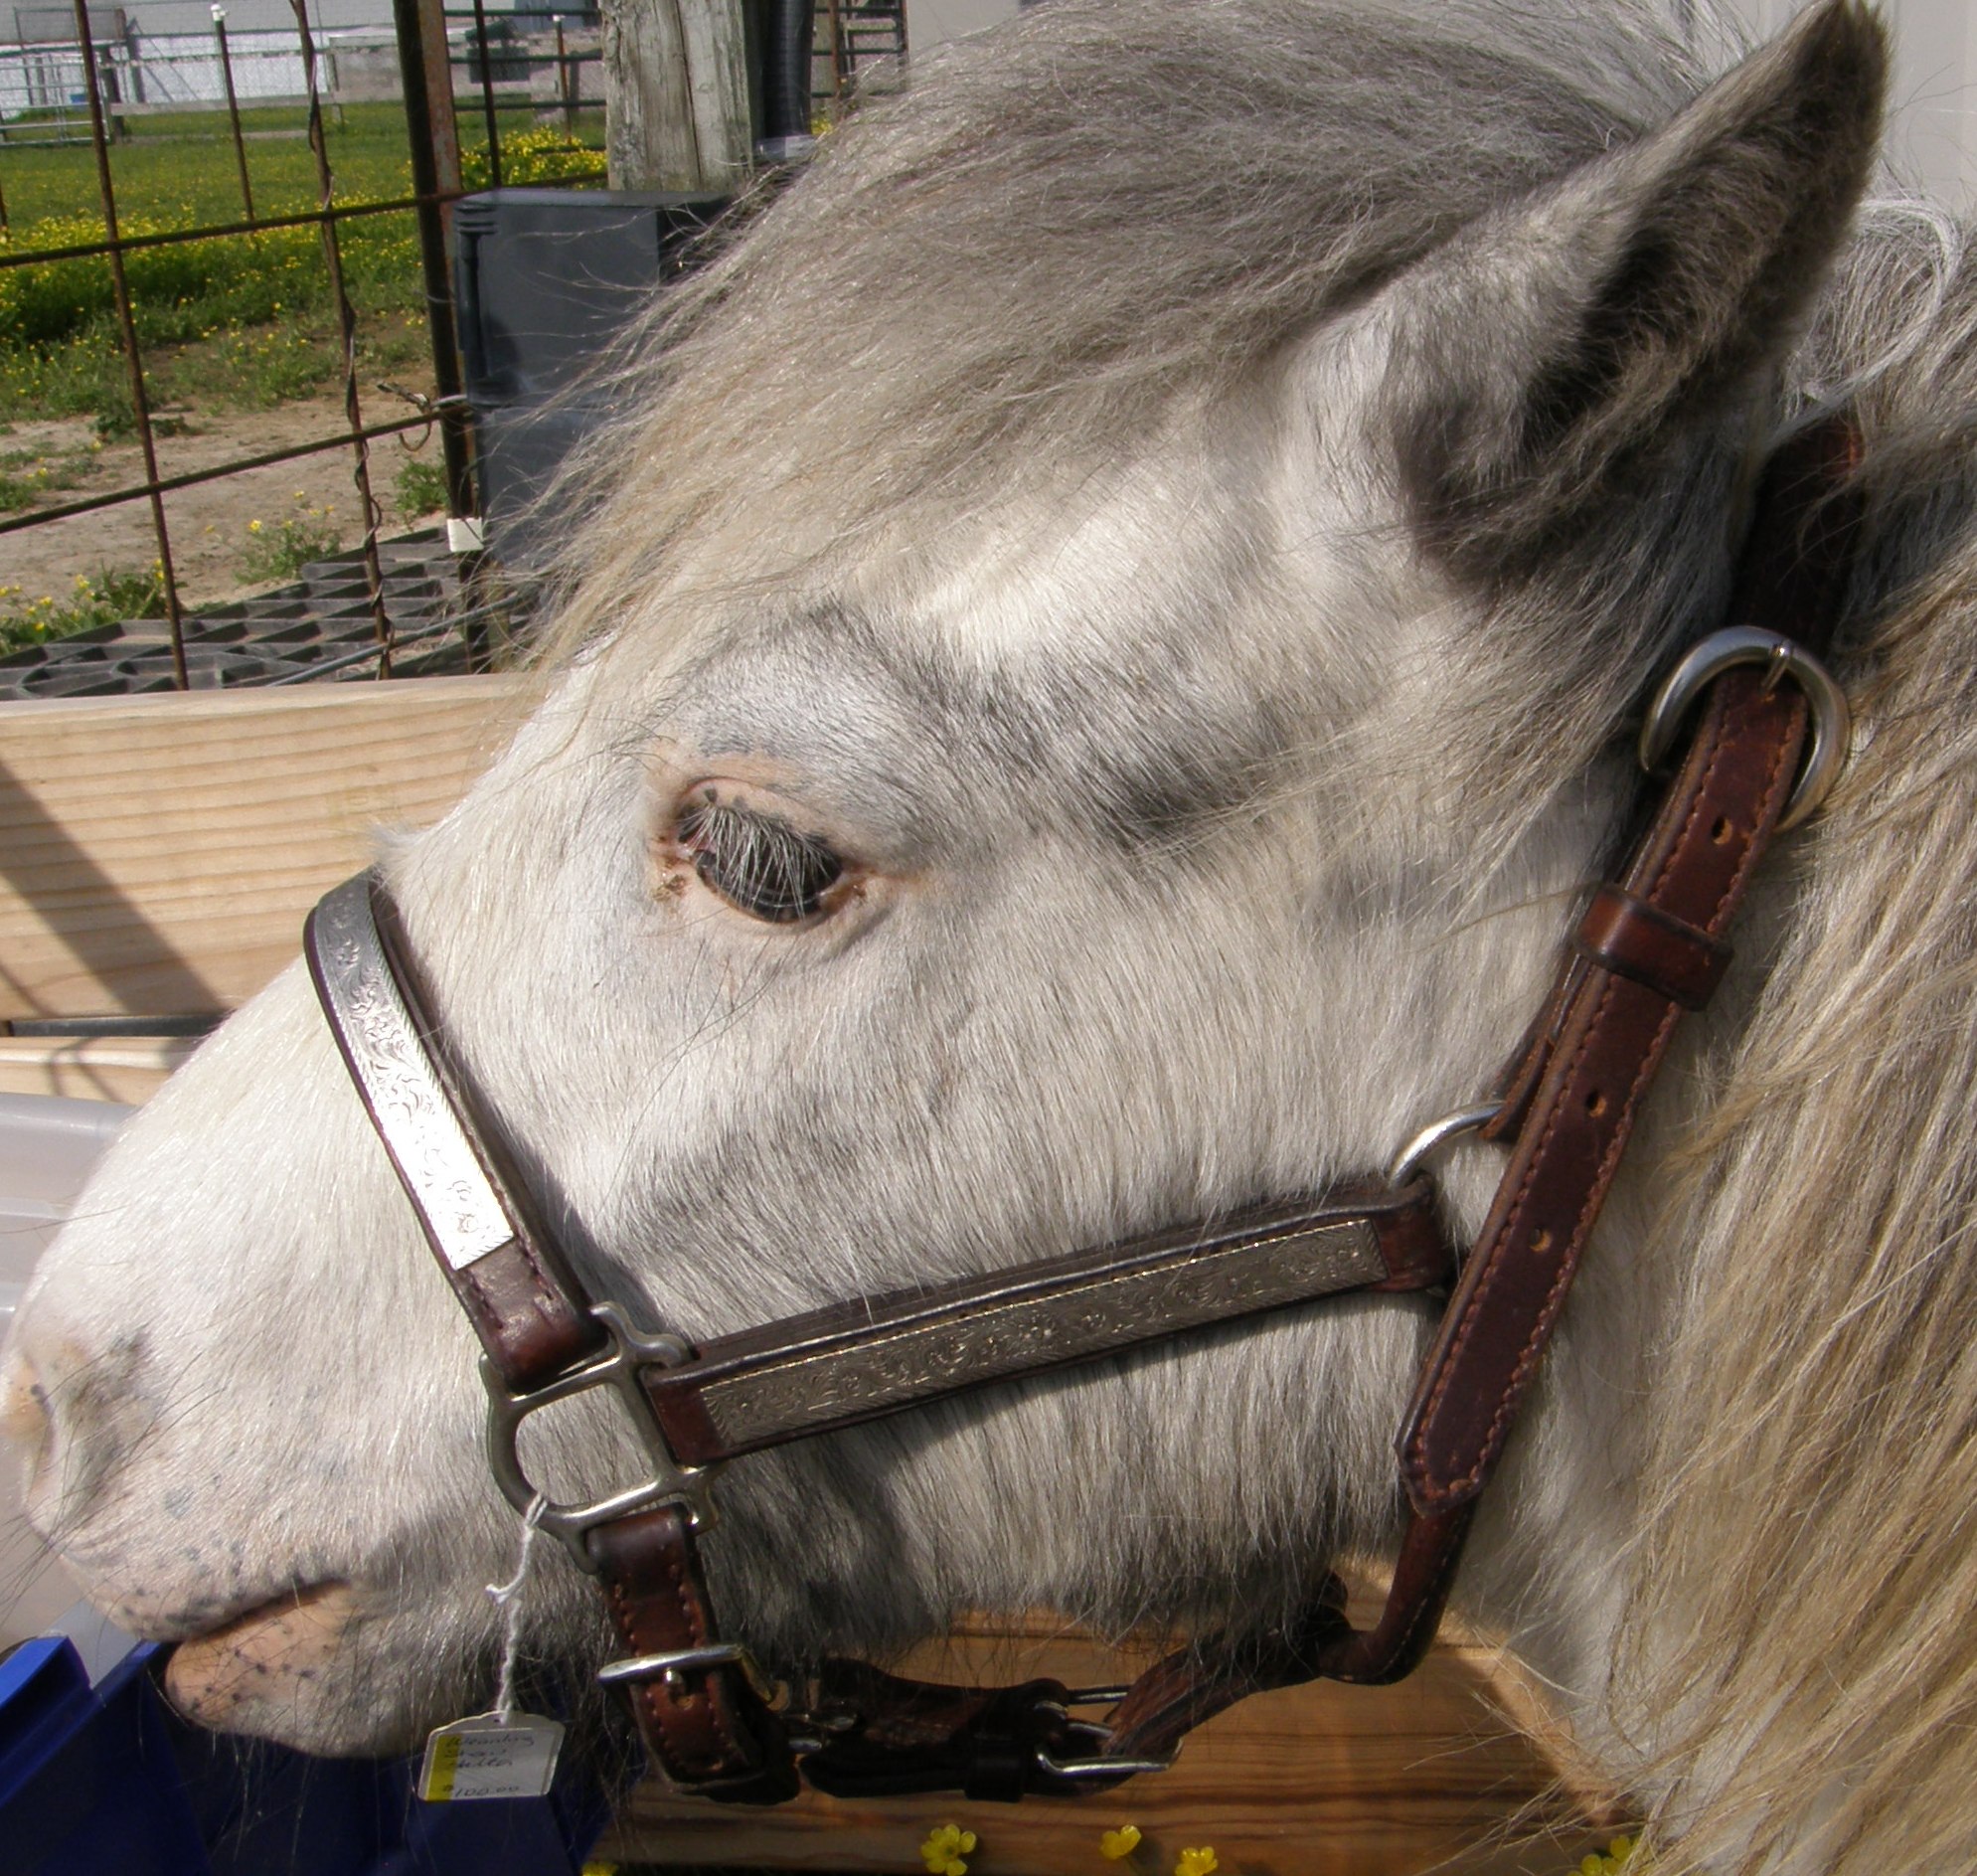 Western Stock Show Halter Silver Show Halter Pony/Weanling/Class B Mini Horse Miniature Horse Show Halter